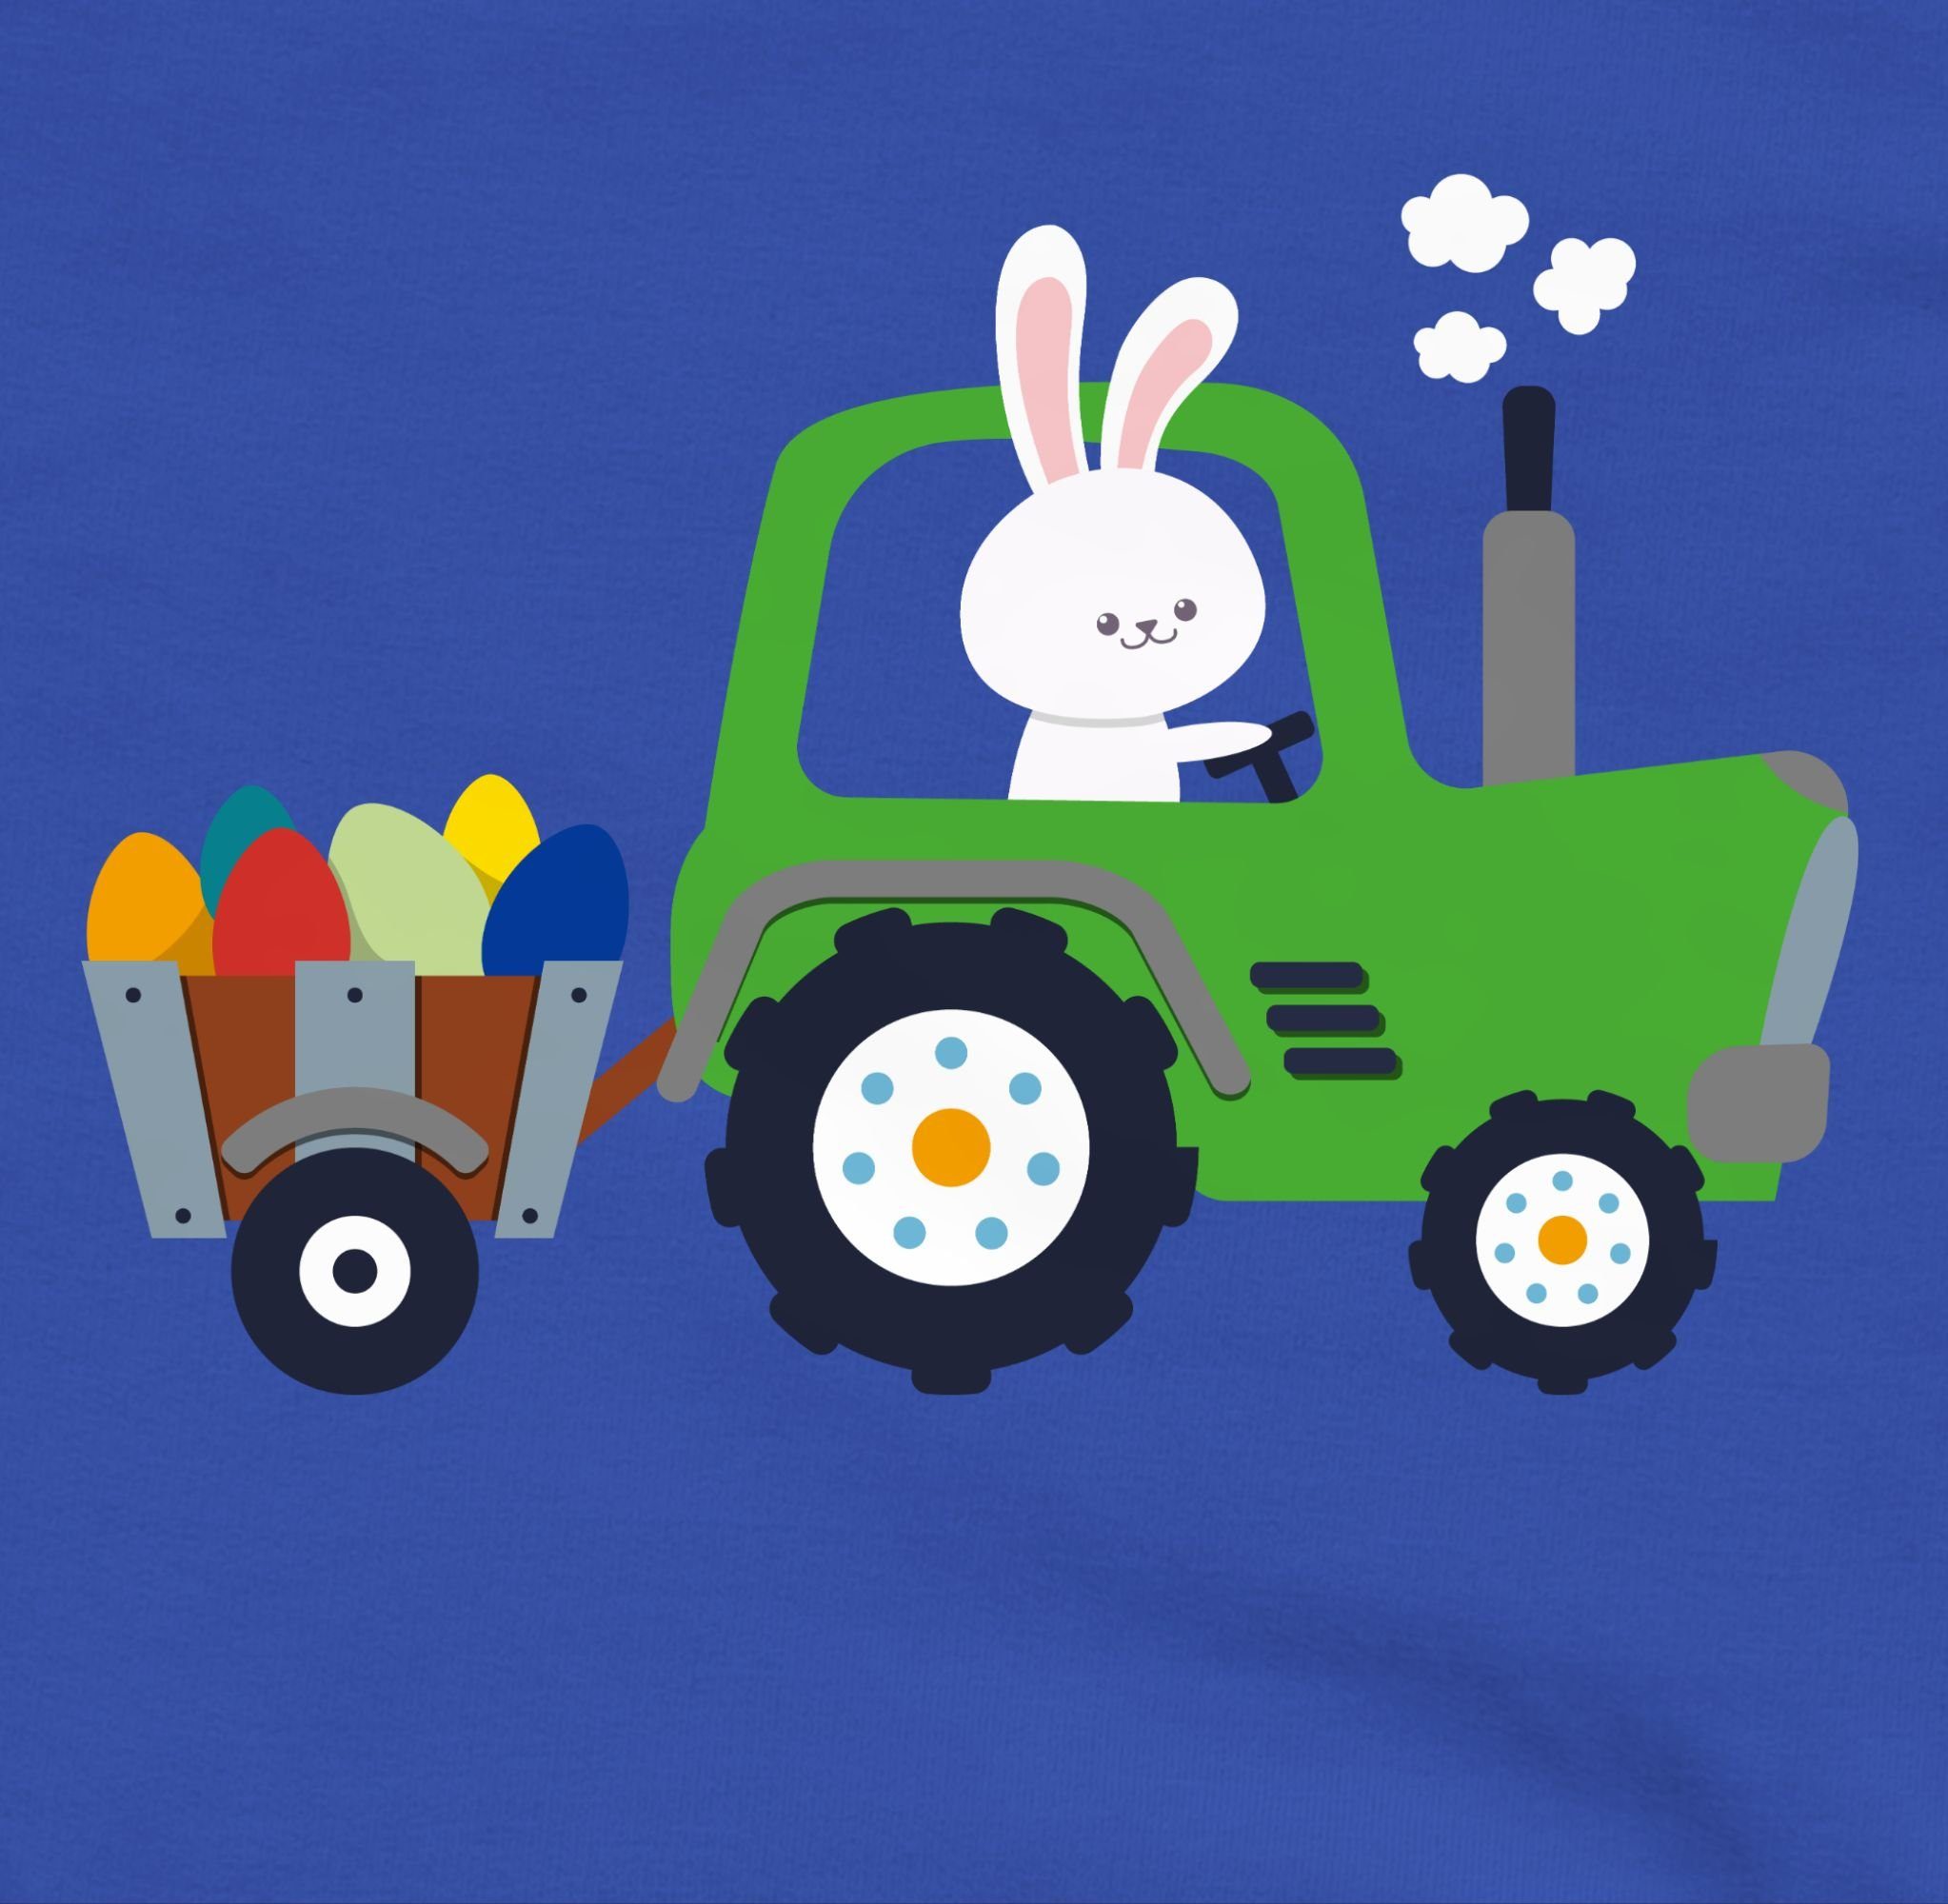 Hase 2 Ostereier Shirtracer Royalblau Geschenk Ostern Traktor Sweatshirt